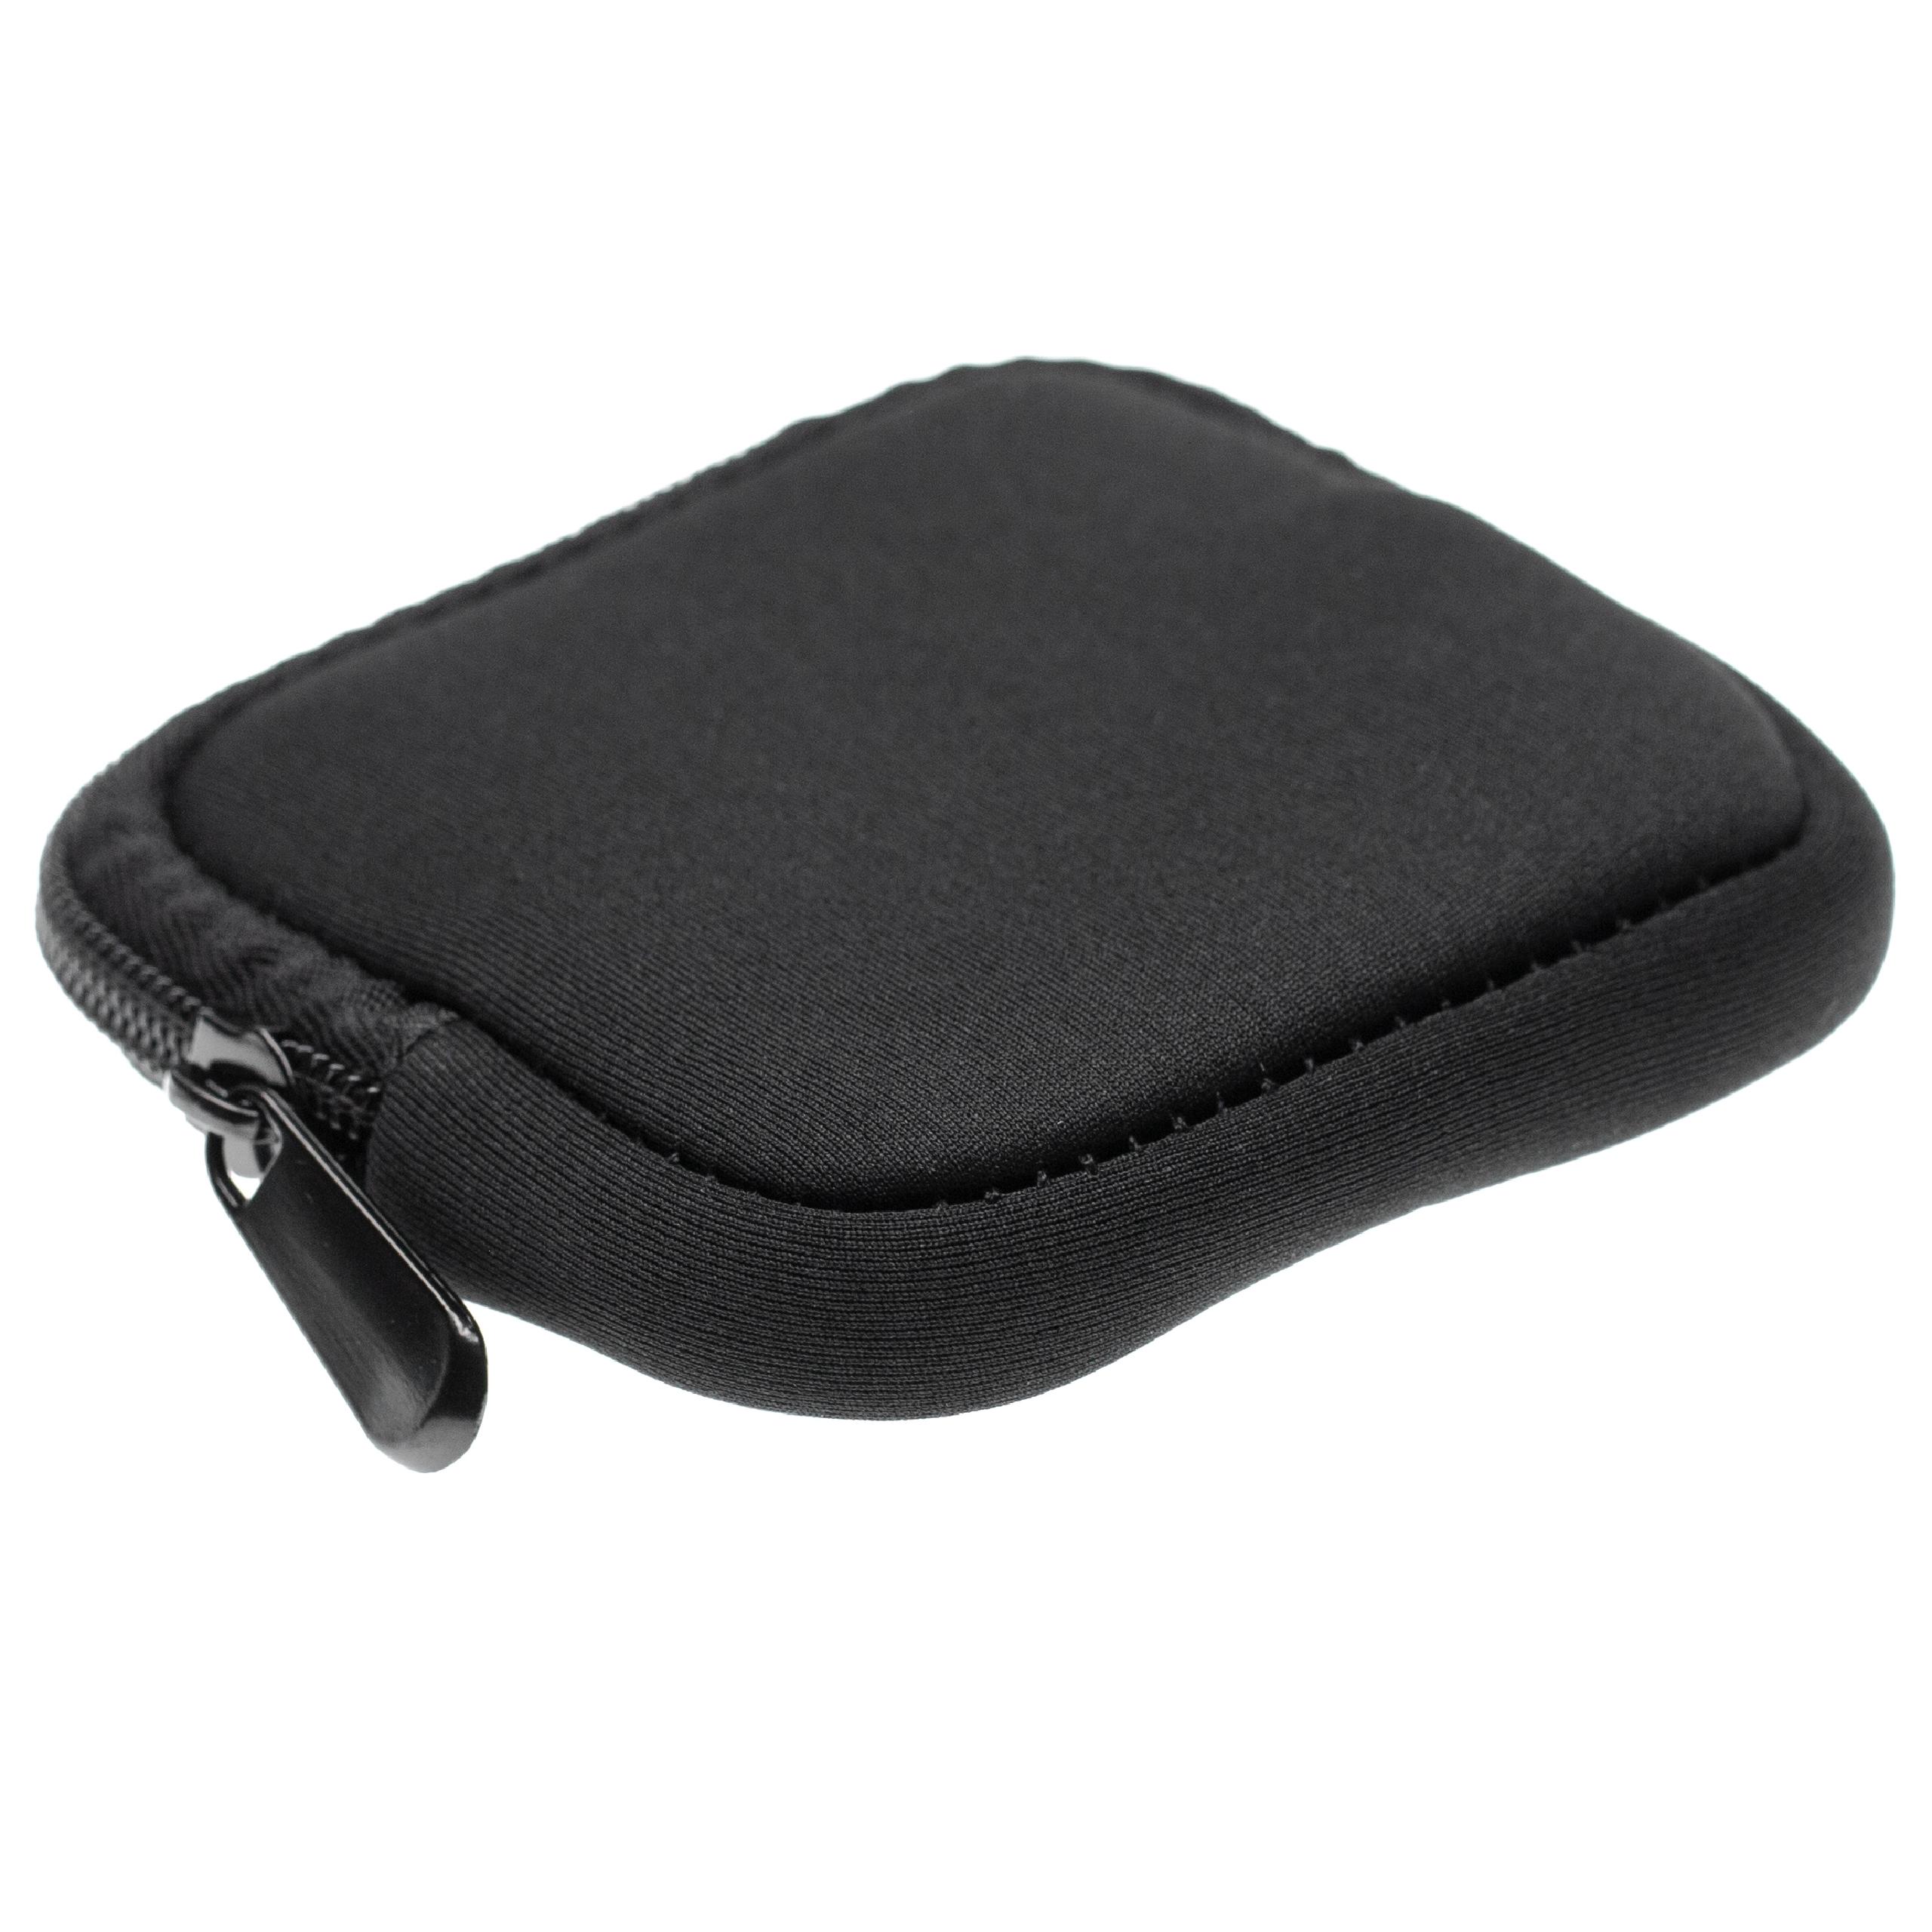 Transport Case suitable for Apple airPods Pro Headphones, Headset - Bag, neoprene, black